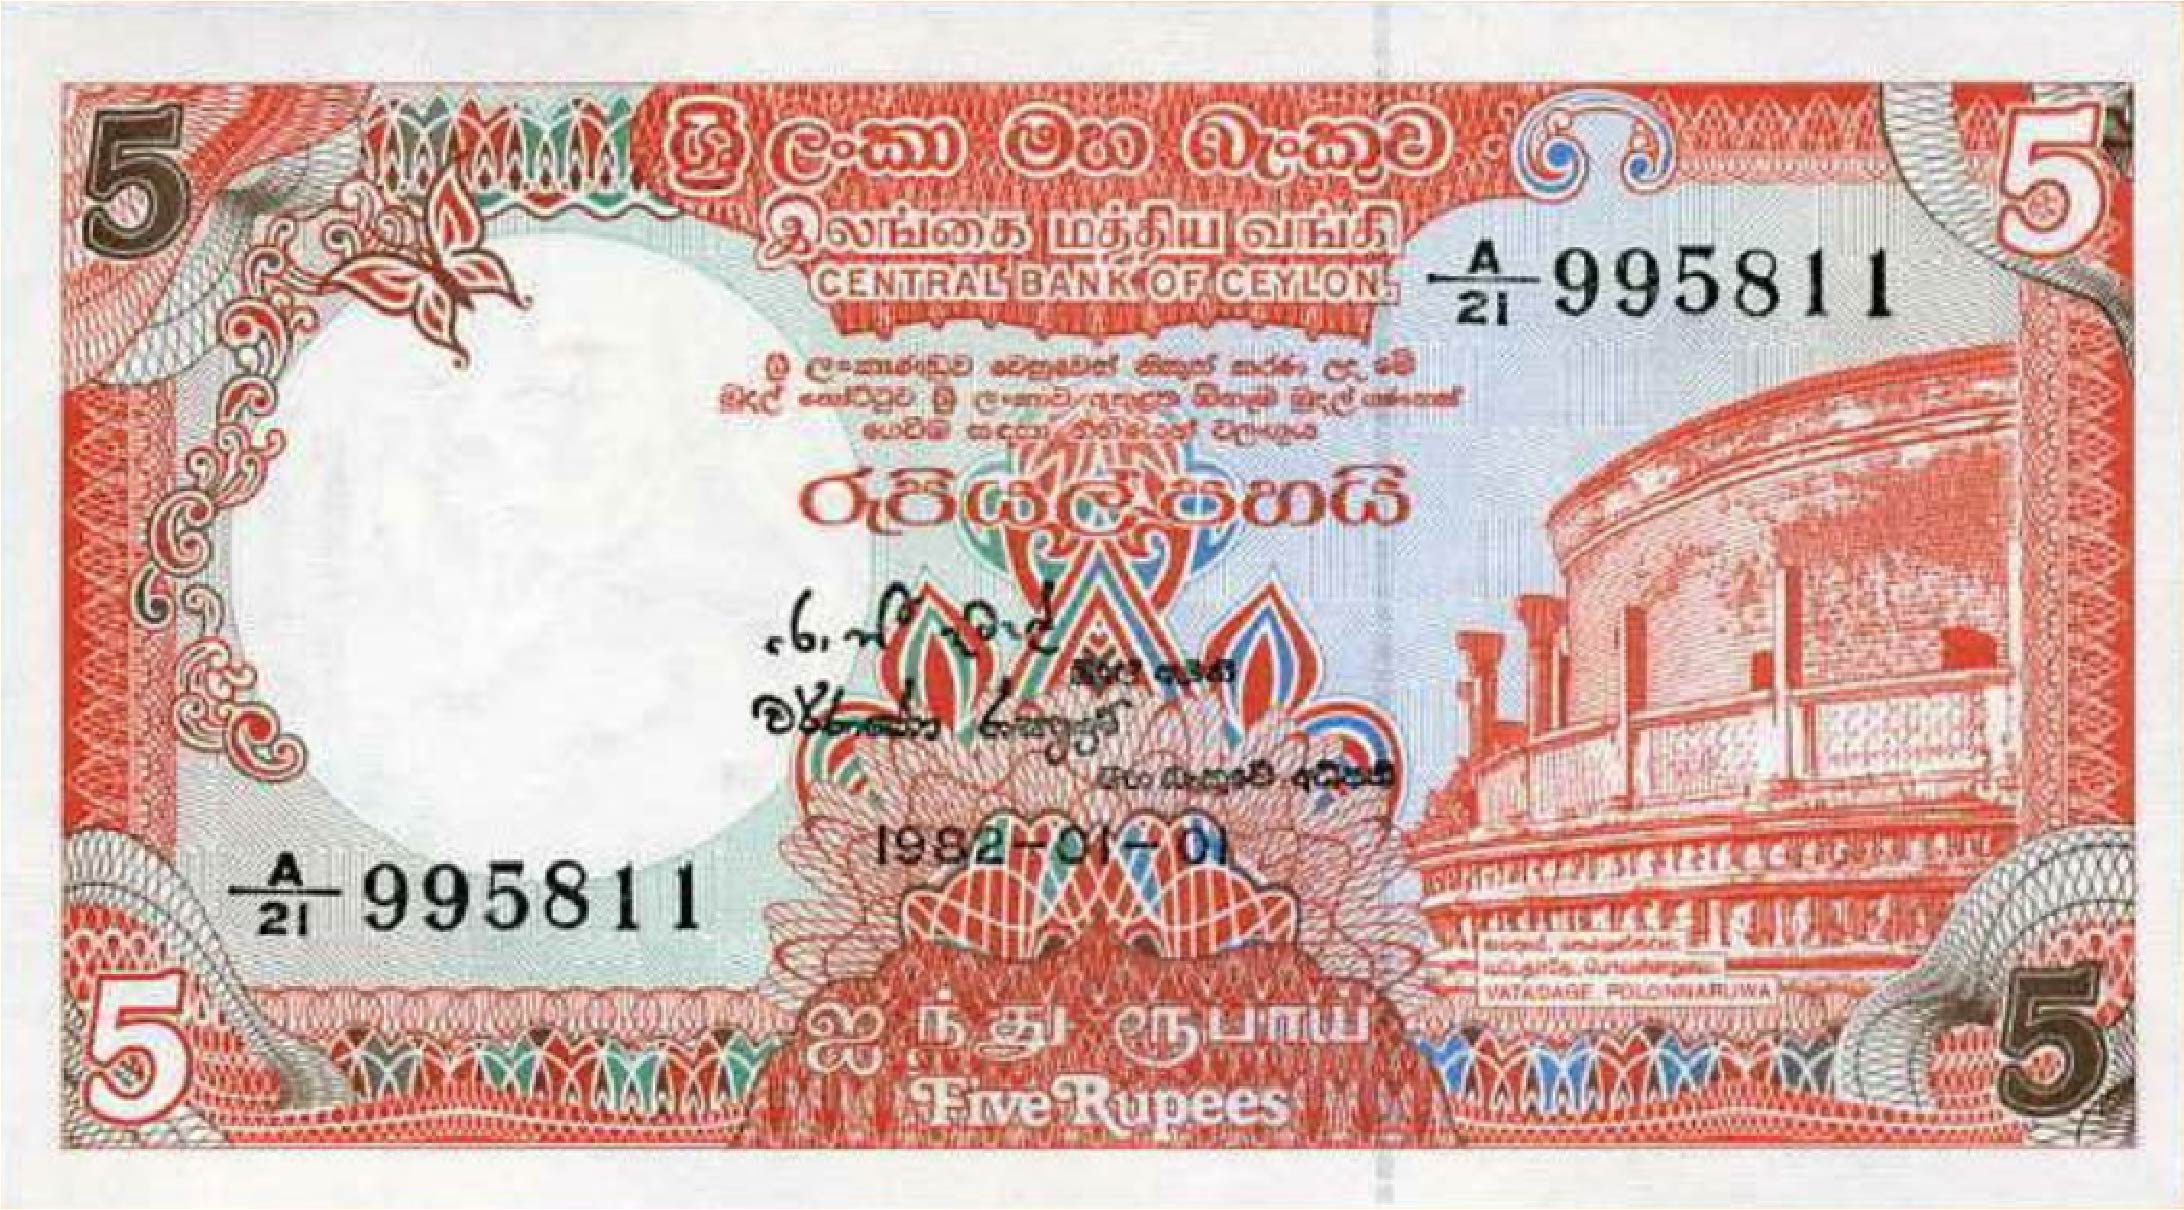 5 Sri Lankan rupees banknote (Polonnaruwa Vatadage) Exchange yours